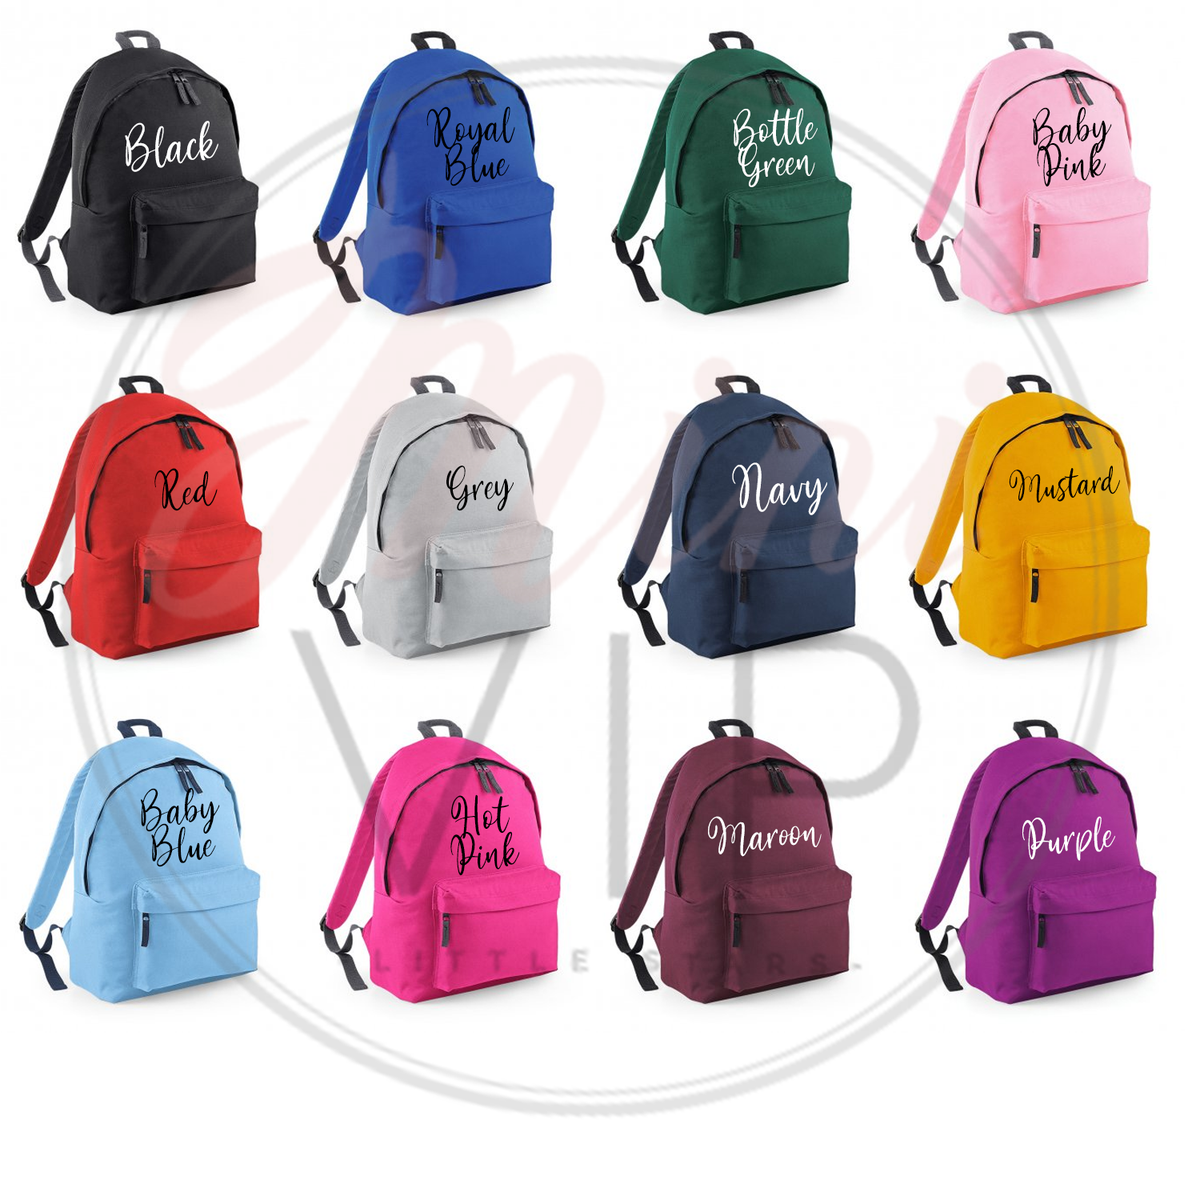 Personalised School Rose Gold Letter Script Bag - other back pack colour options